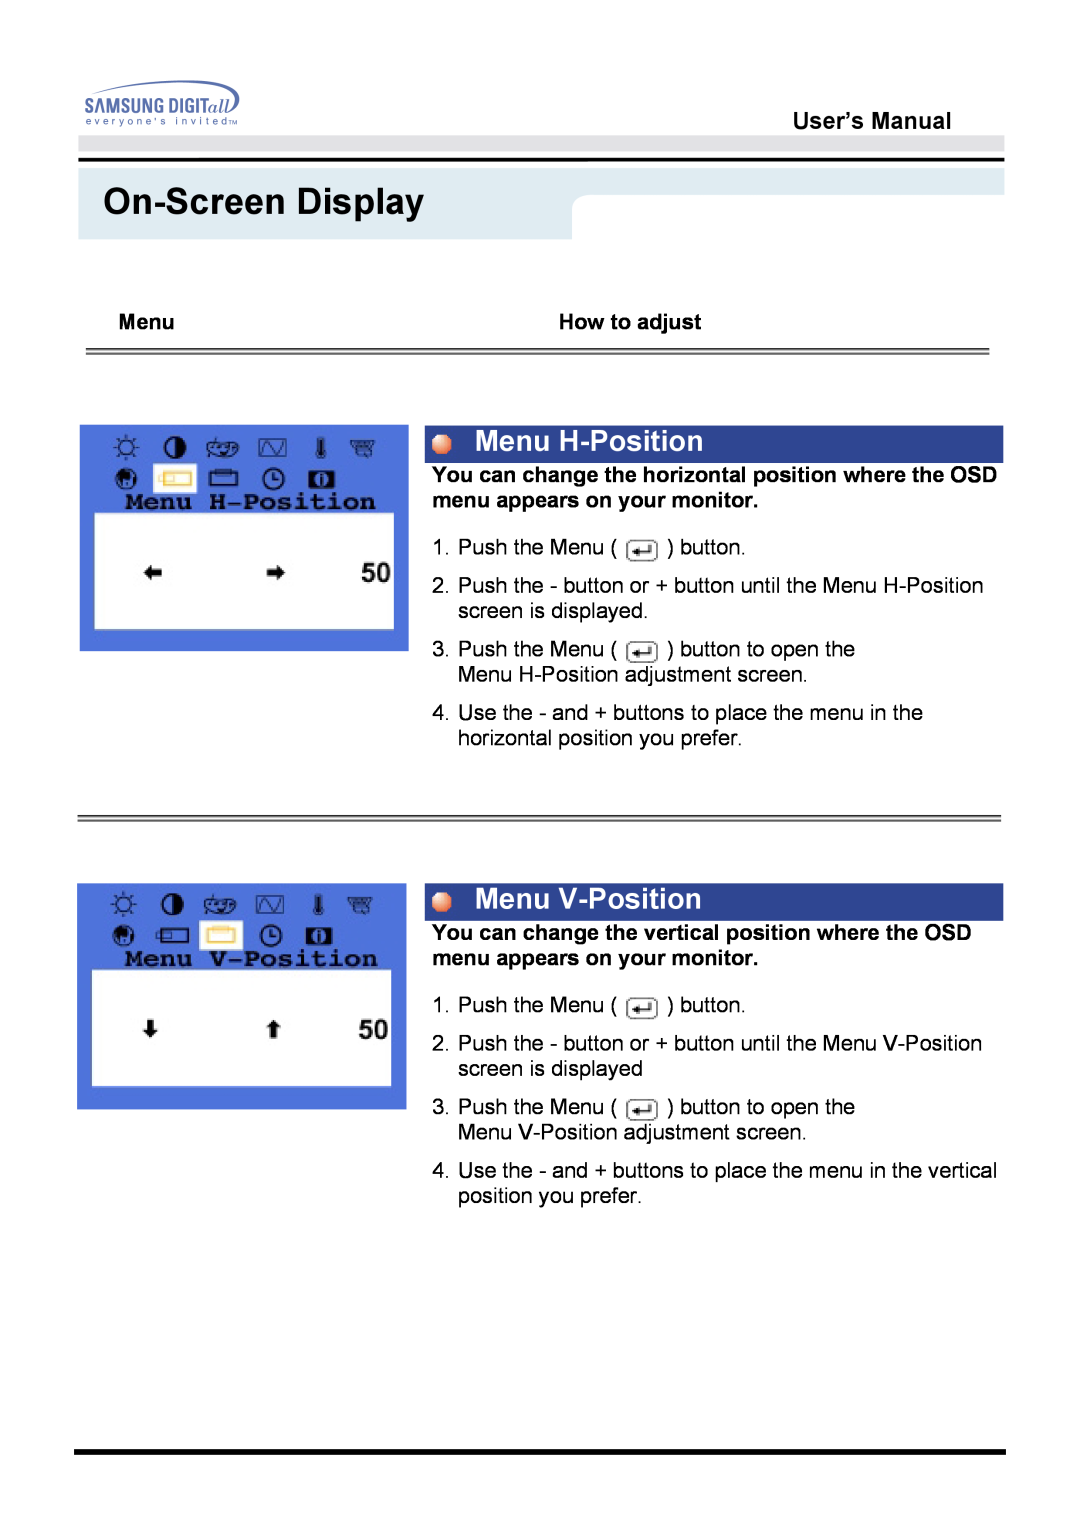 Samsung 151D user manual Menu H-Position, Menu V-Position, On-Screen Display, User’s Manual 